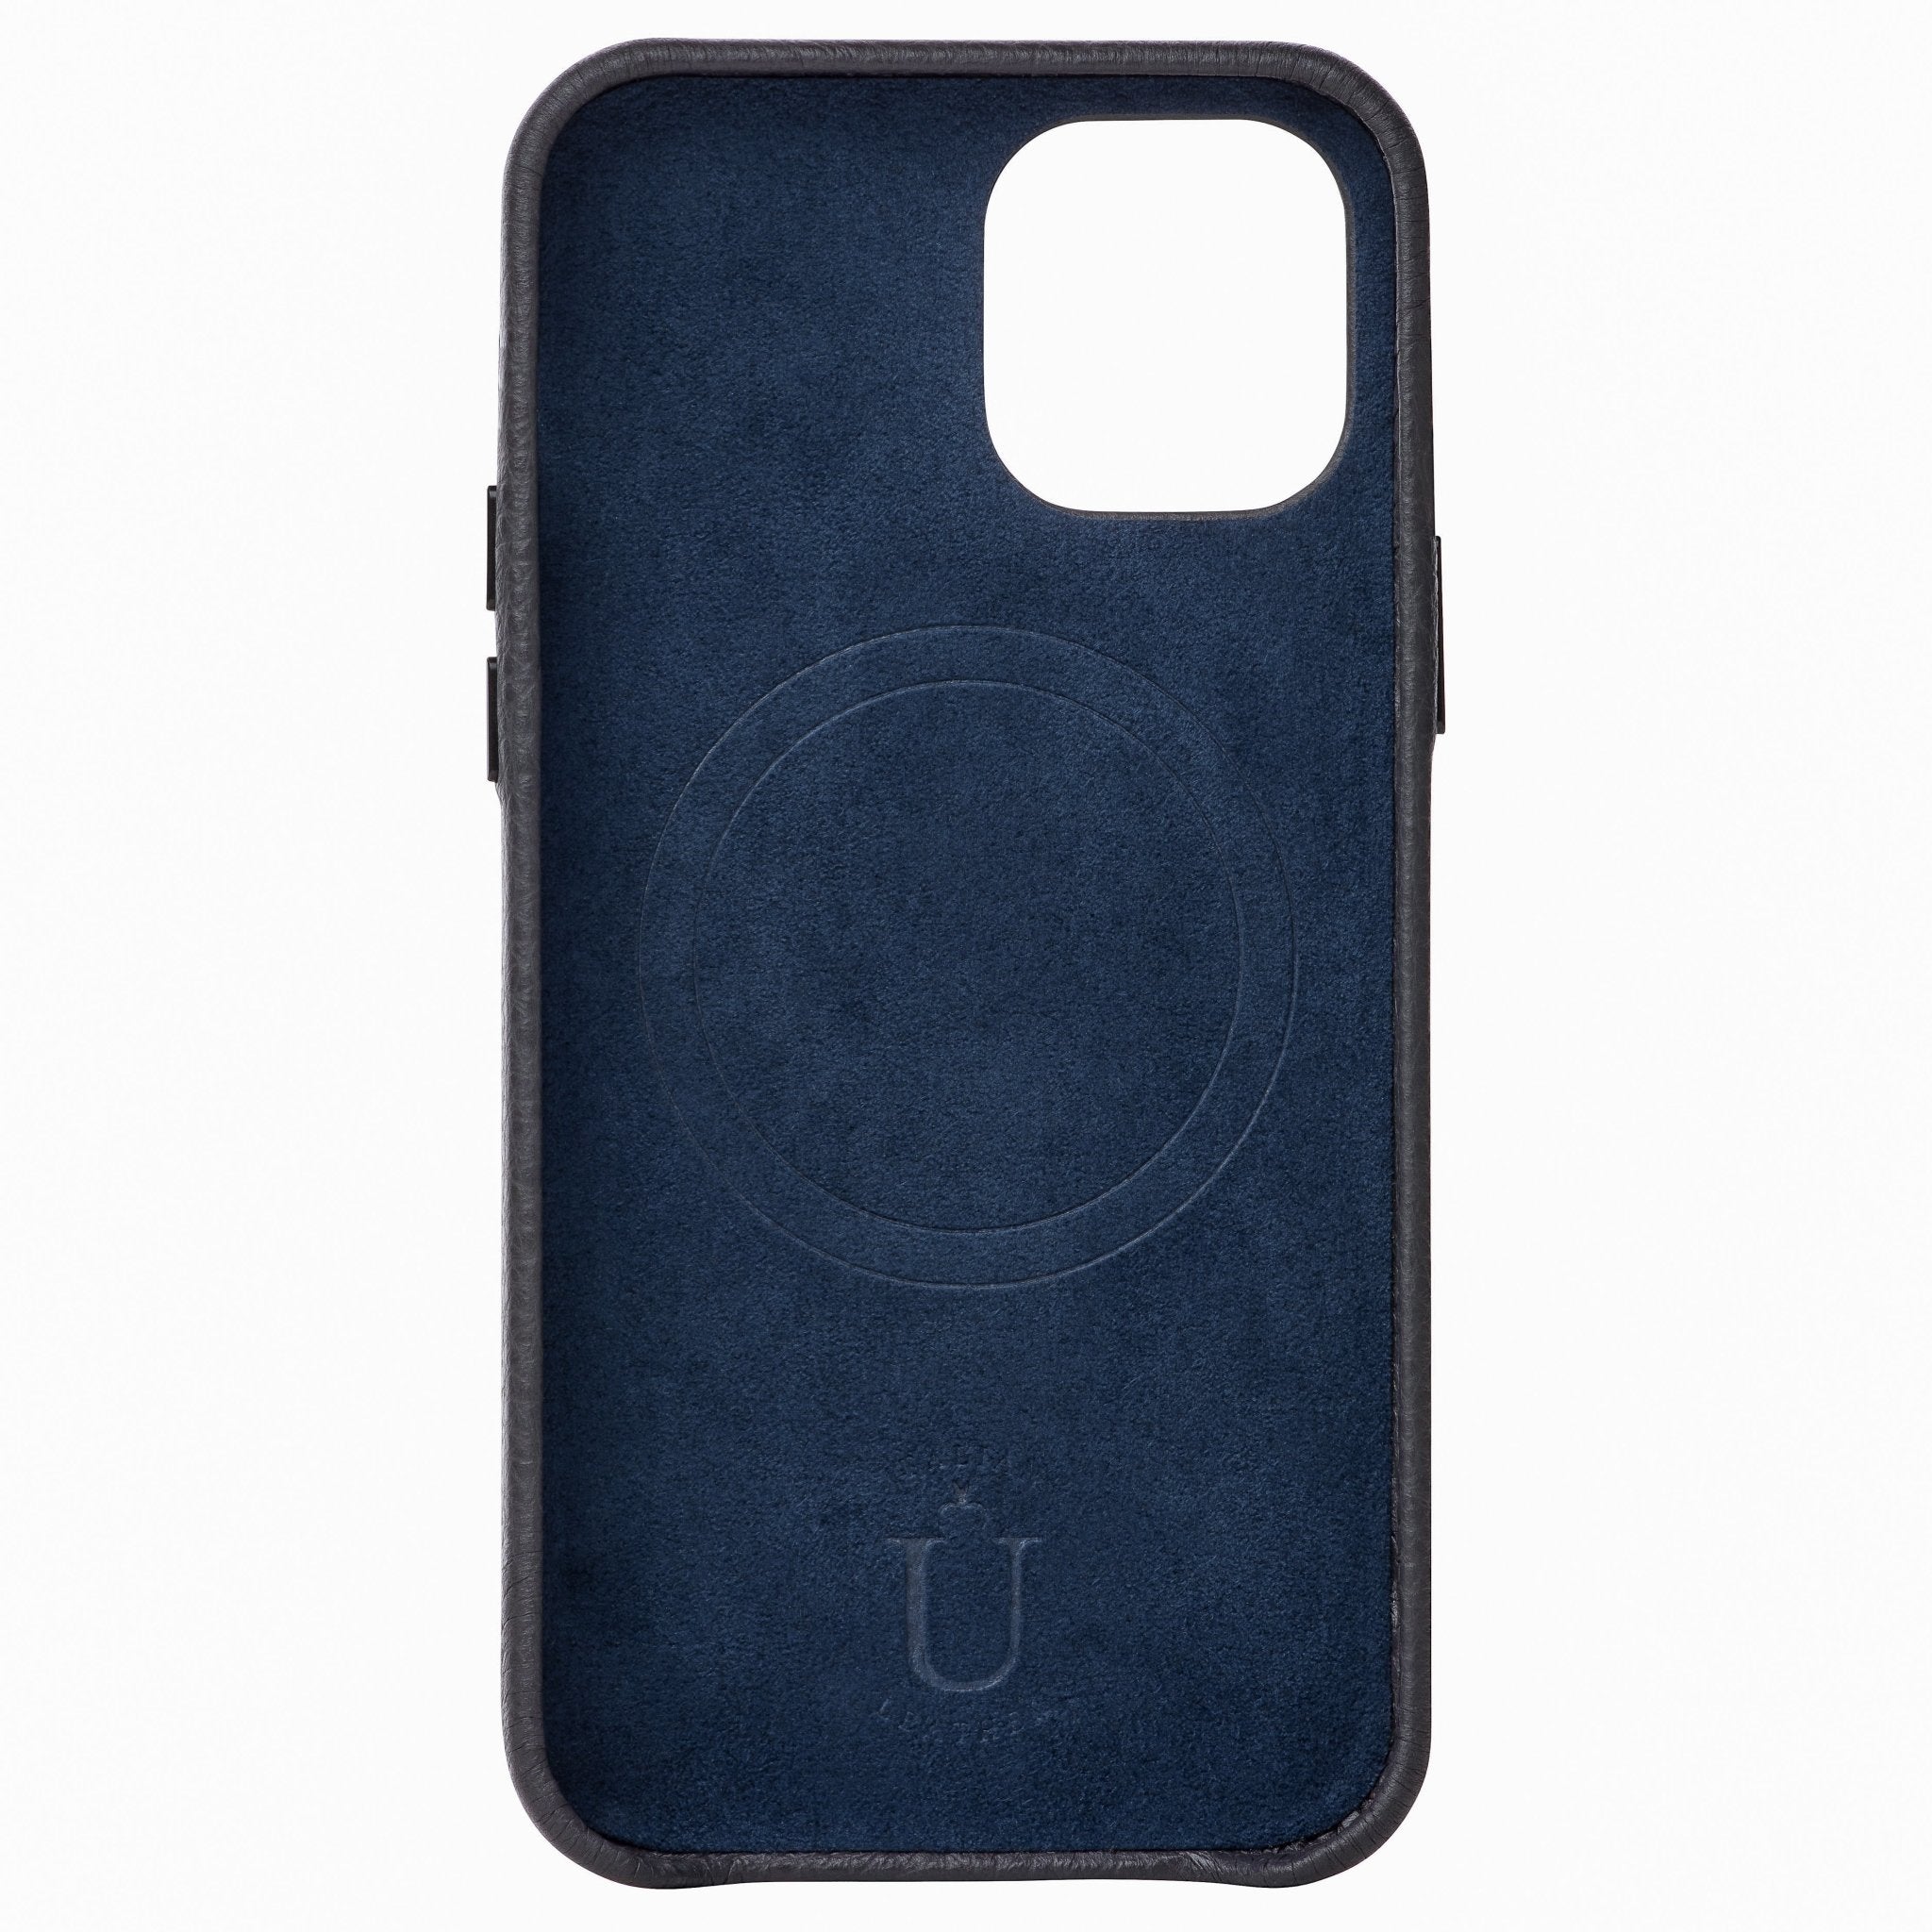 Ubique Italy Luxury iPhone Case 14 Pebble Grain Leather Storm Grey Inner Lining